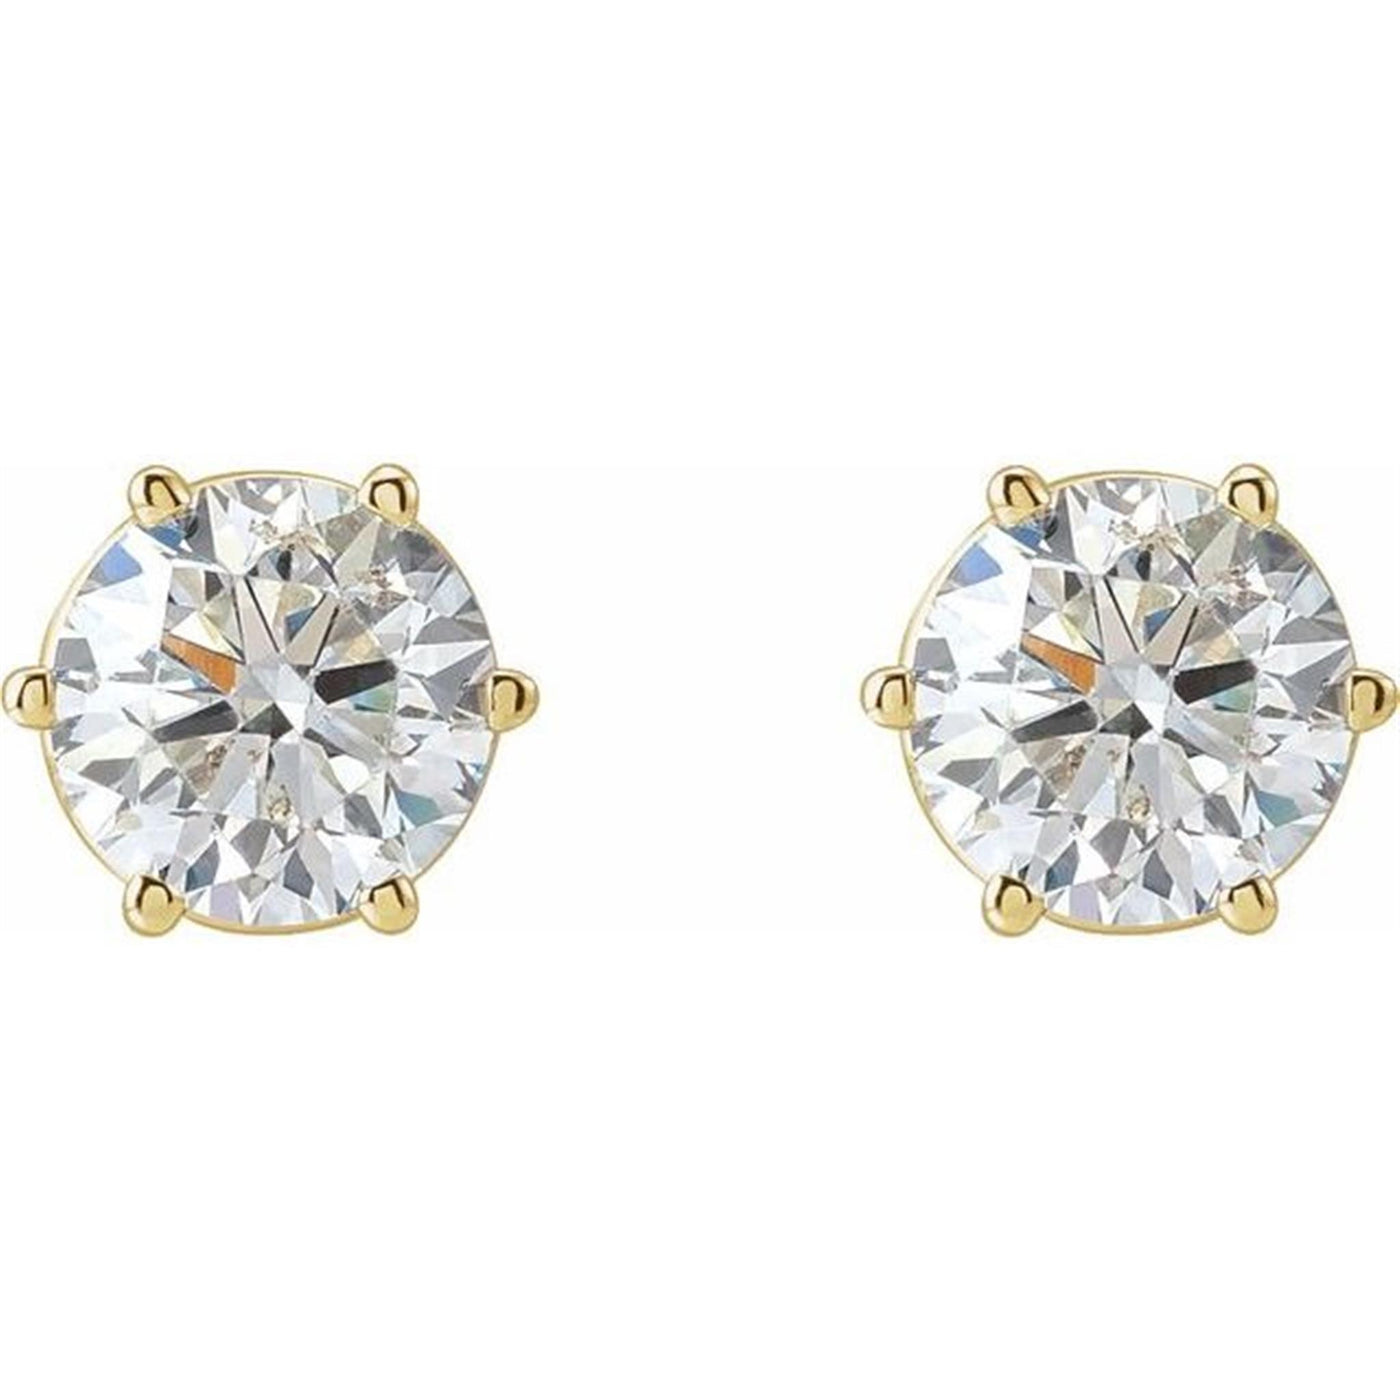 14K Yellow Gold 2.19ctw Diamond Stud Earrings in Six Prong Settings